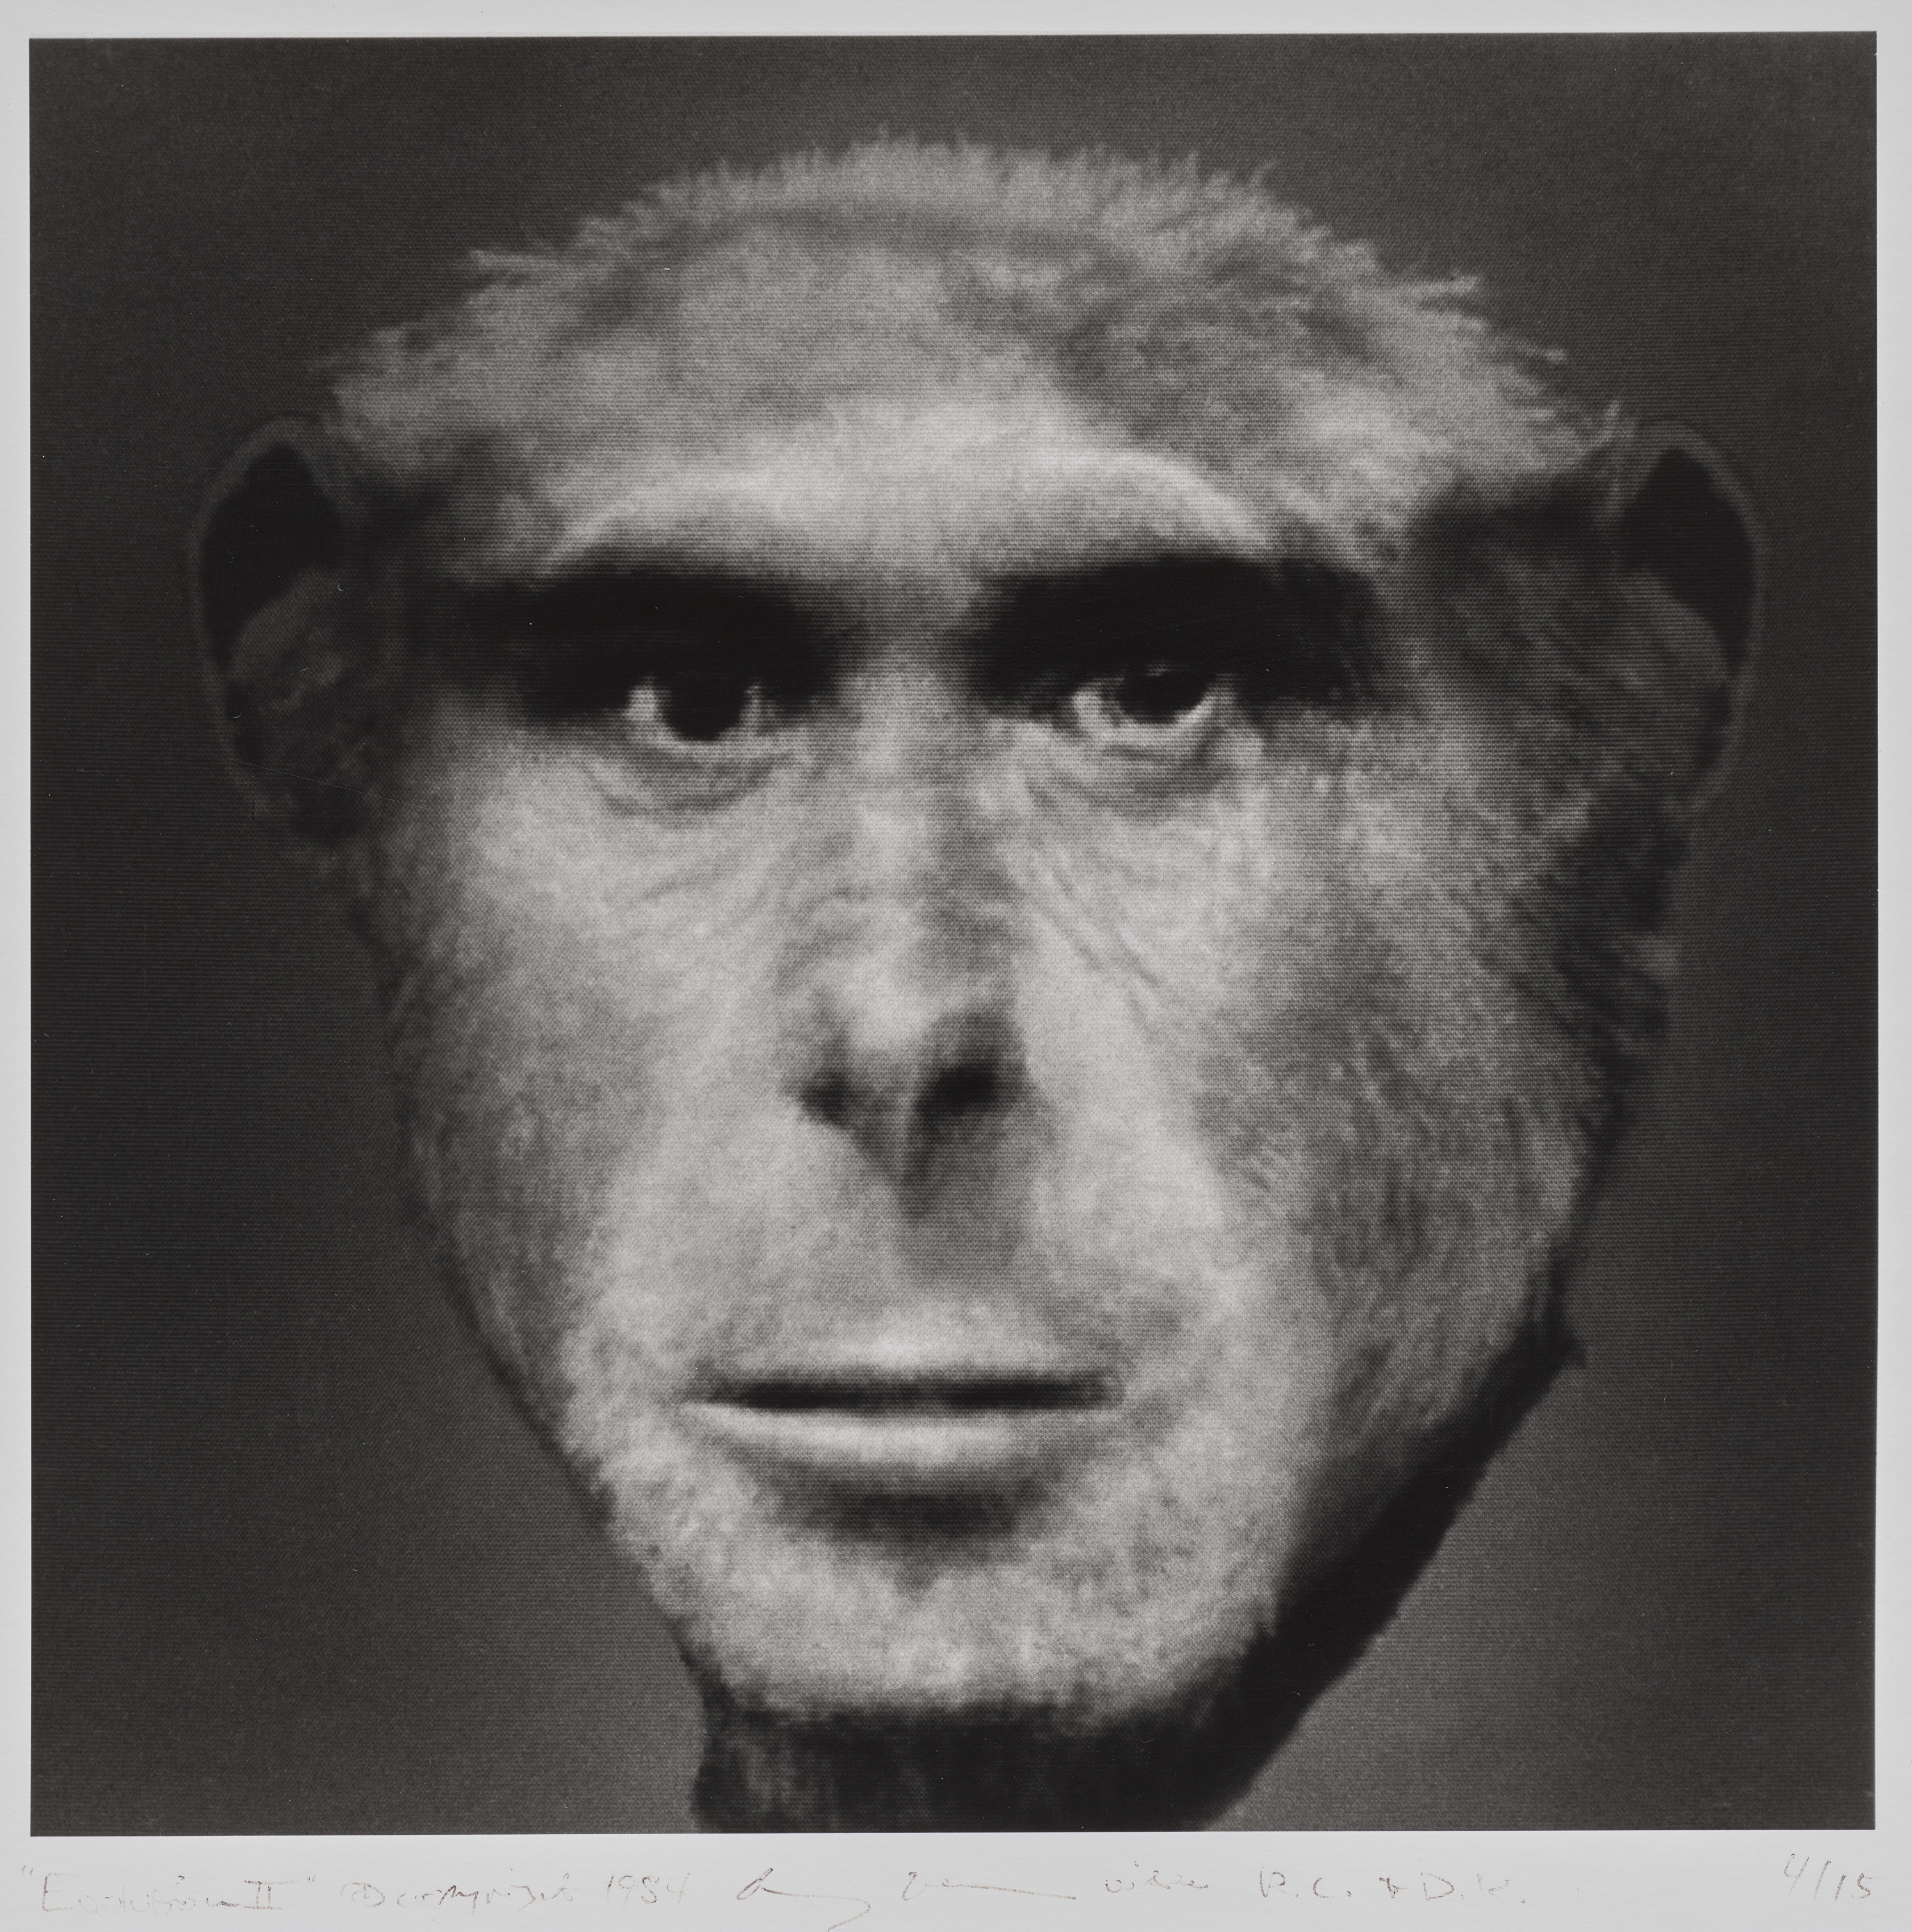 Evolution II (Chimpanzee and Man)